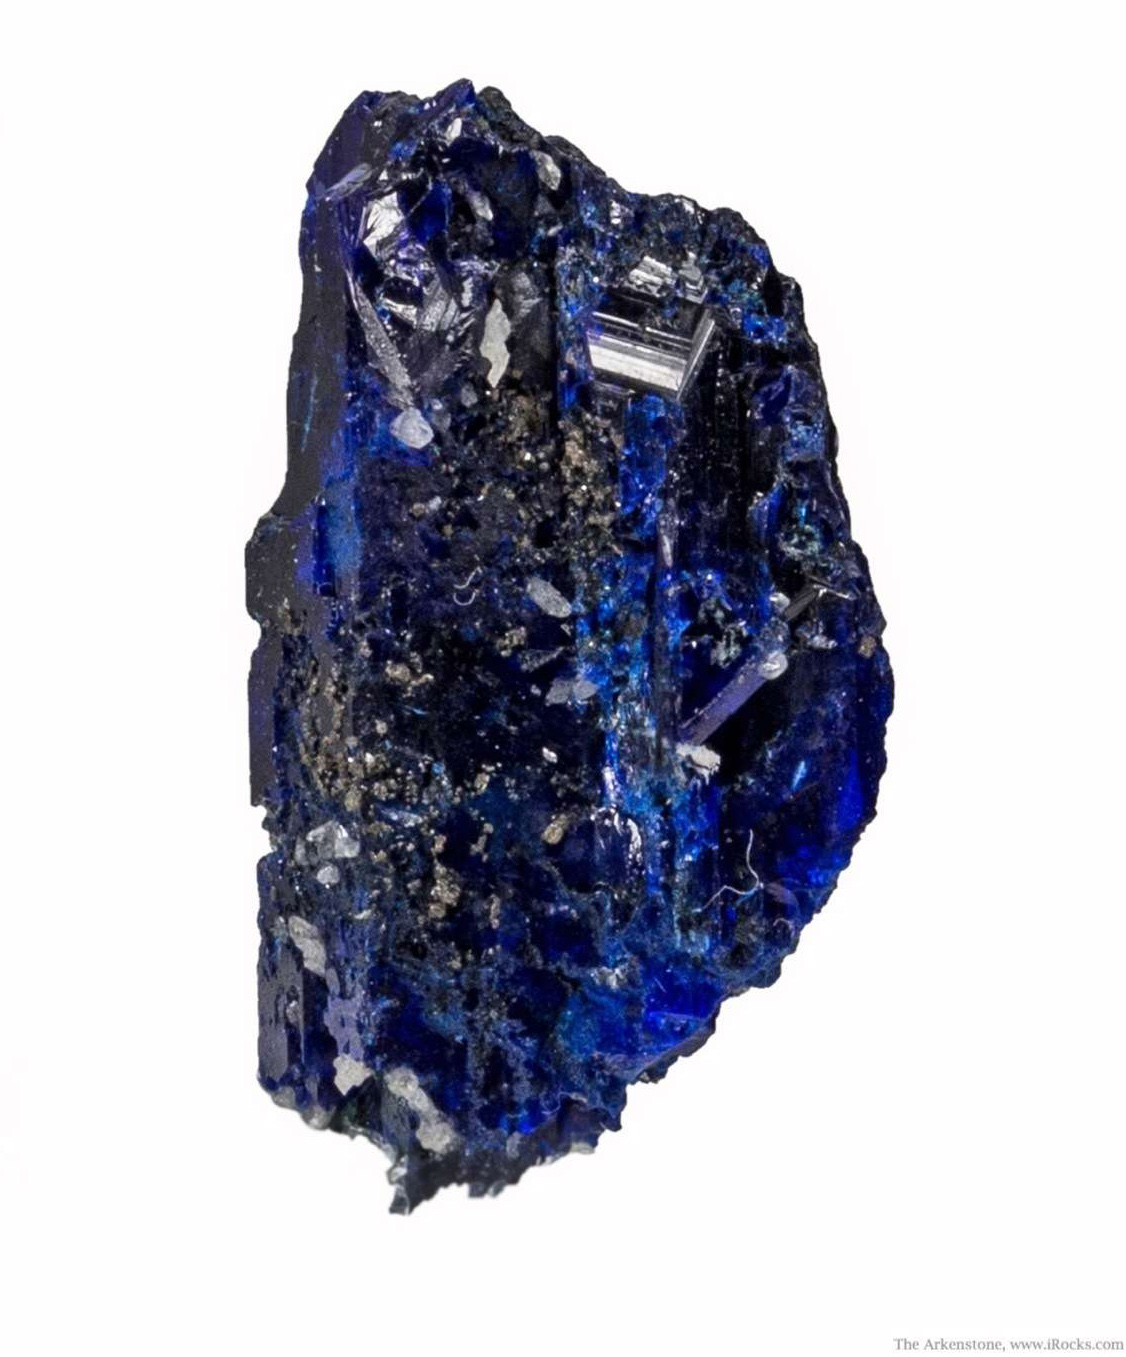 Large Linarite Crystal